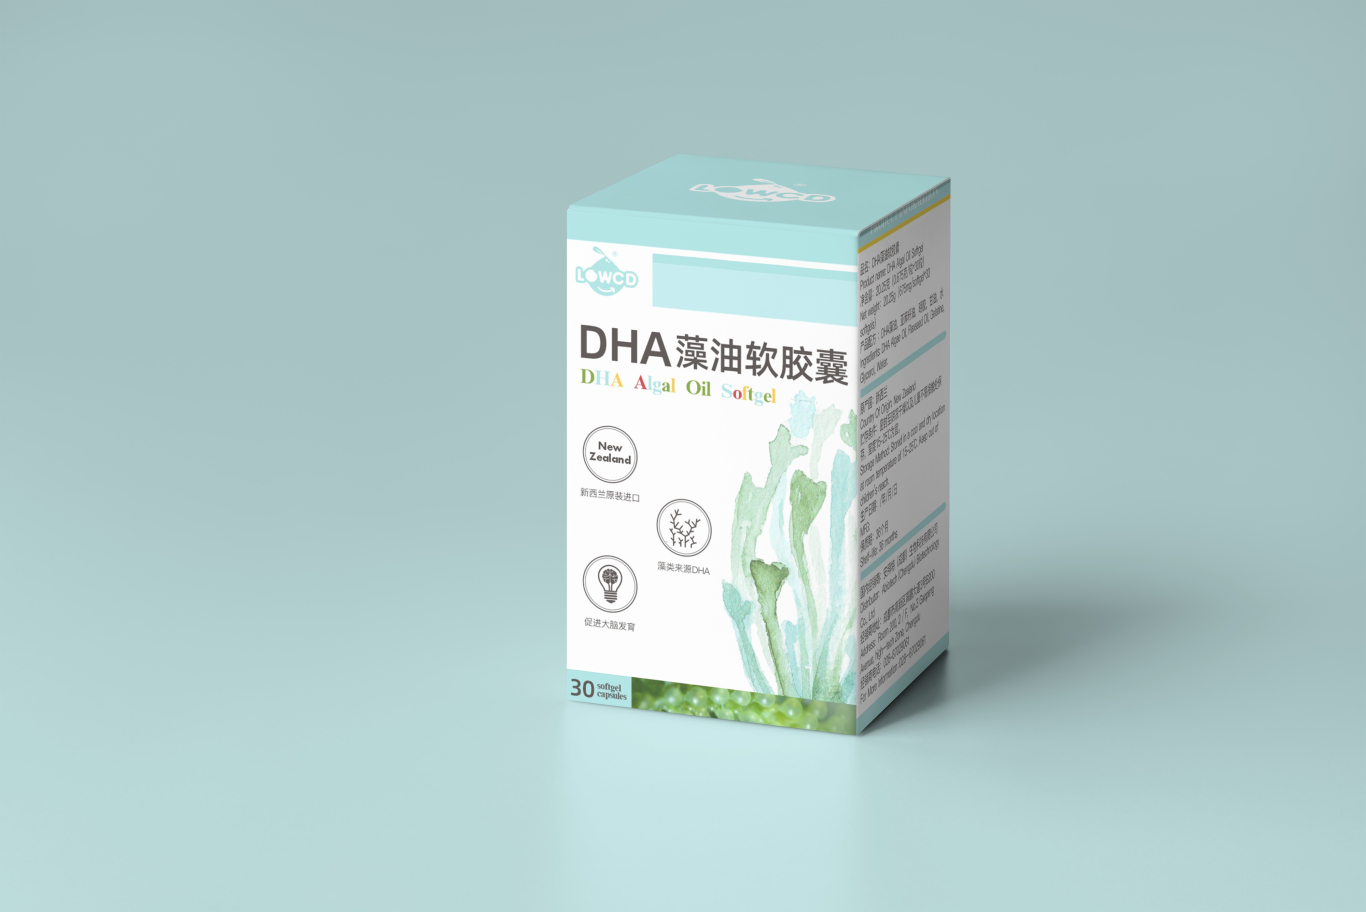 DHA藻油軟膠囊包裝設計圖3